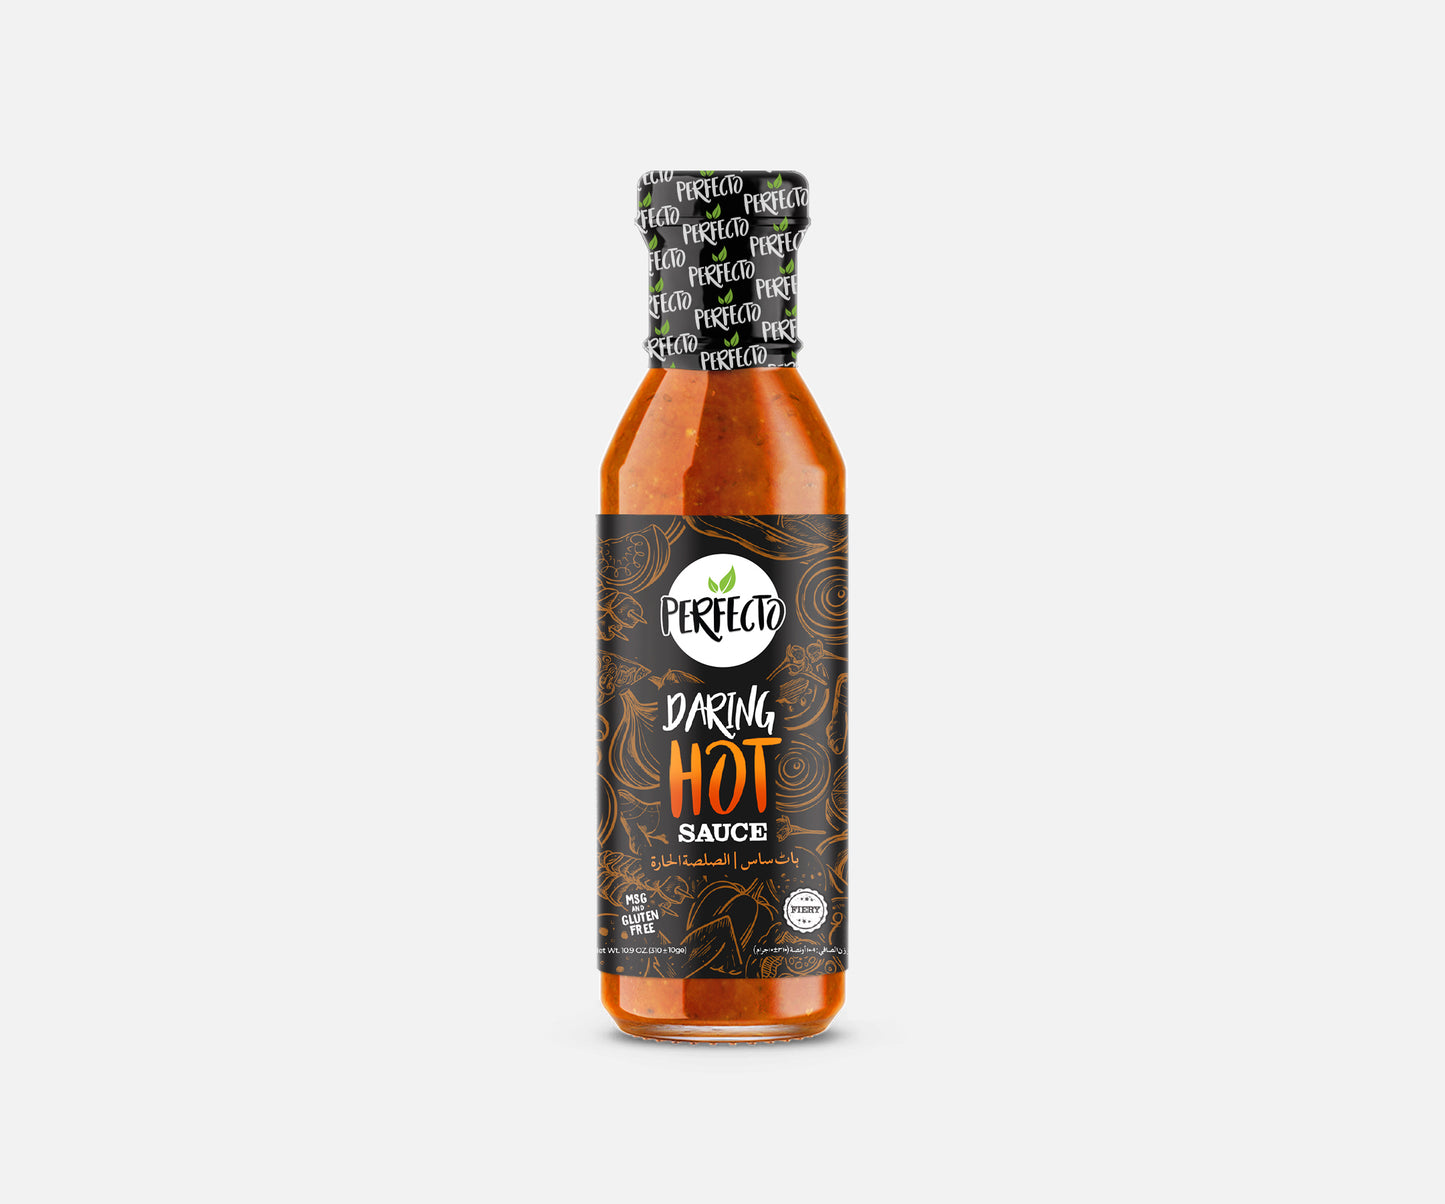 Daring Hot Sauce